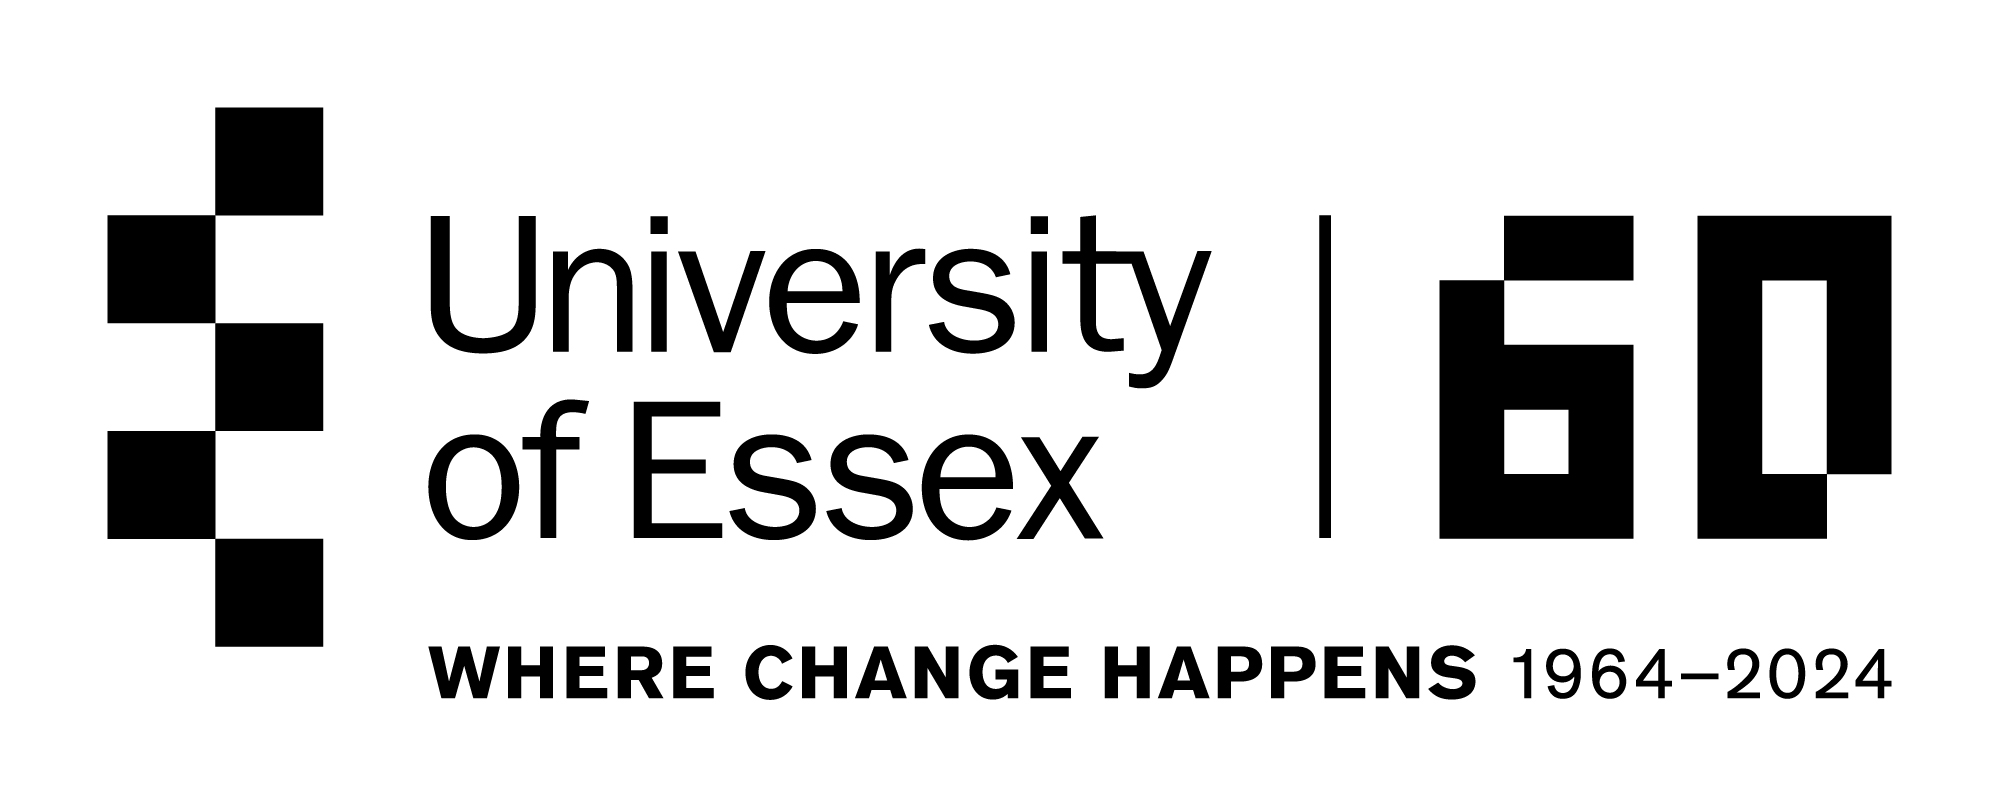 University of Essex 60th anniversary logo with strapline